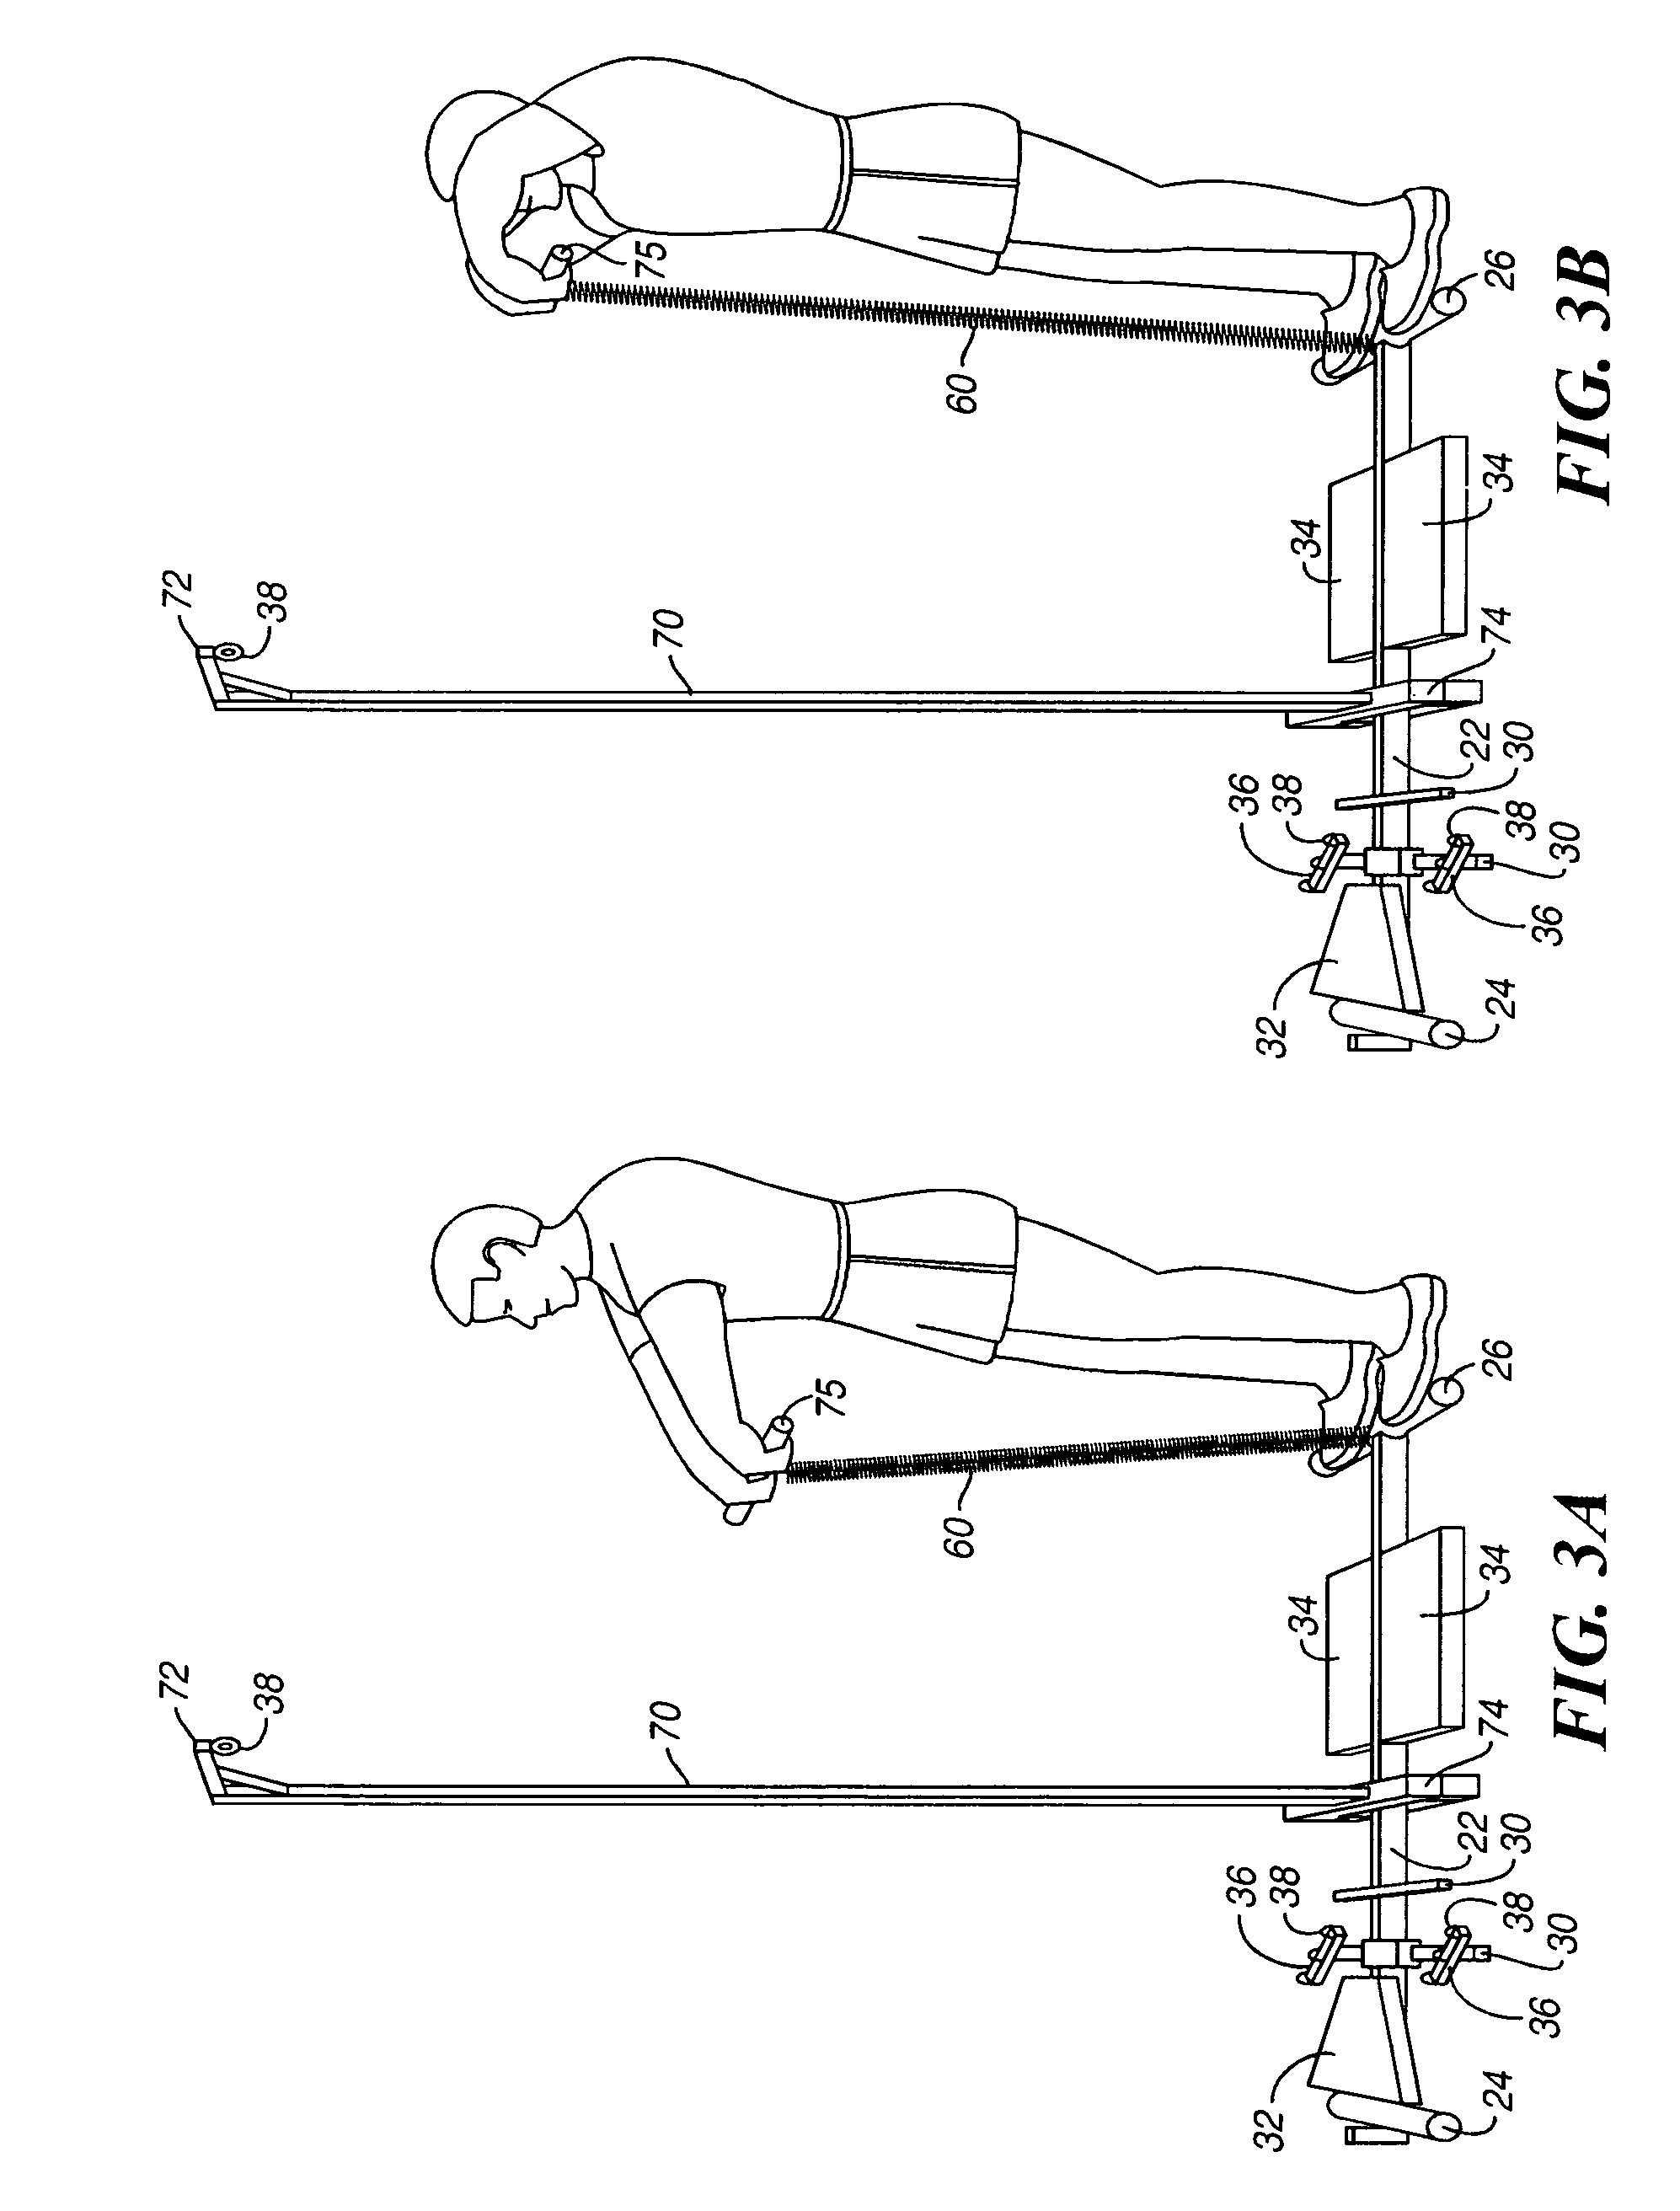 Full body exercise apparatus